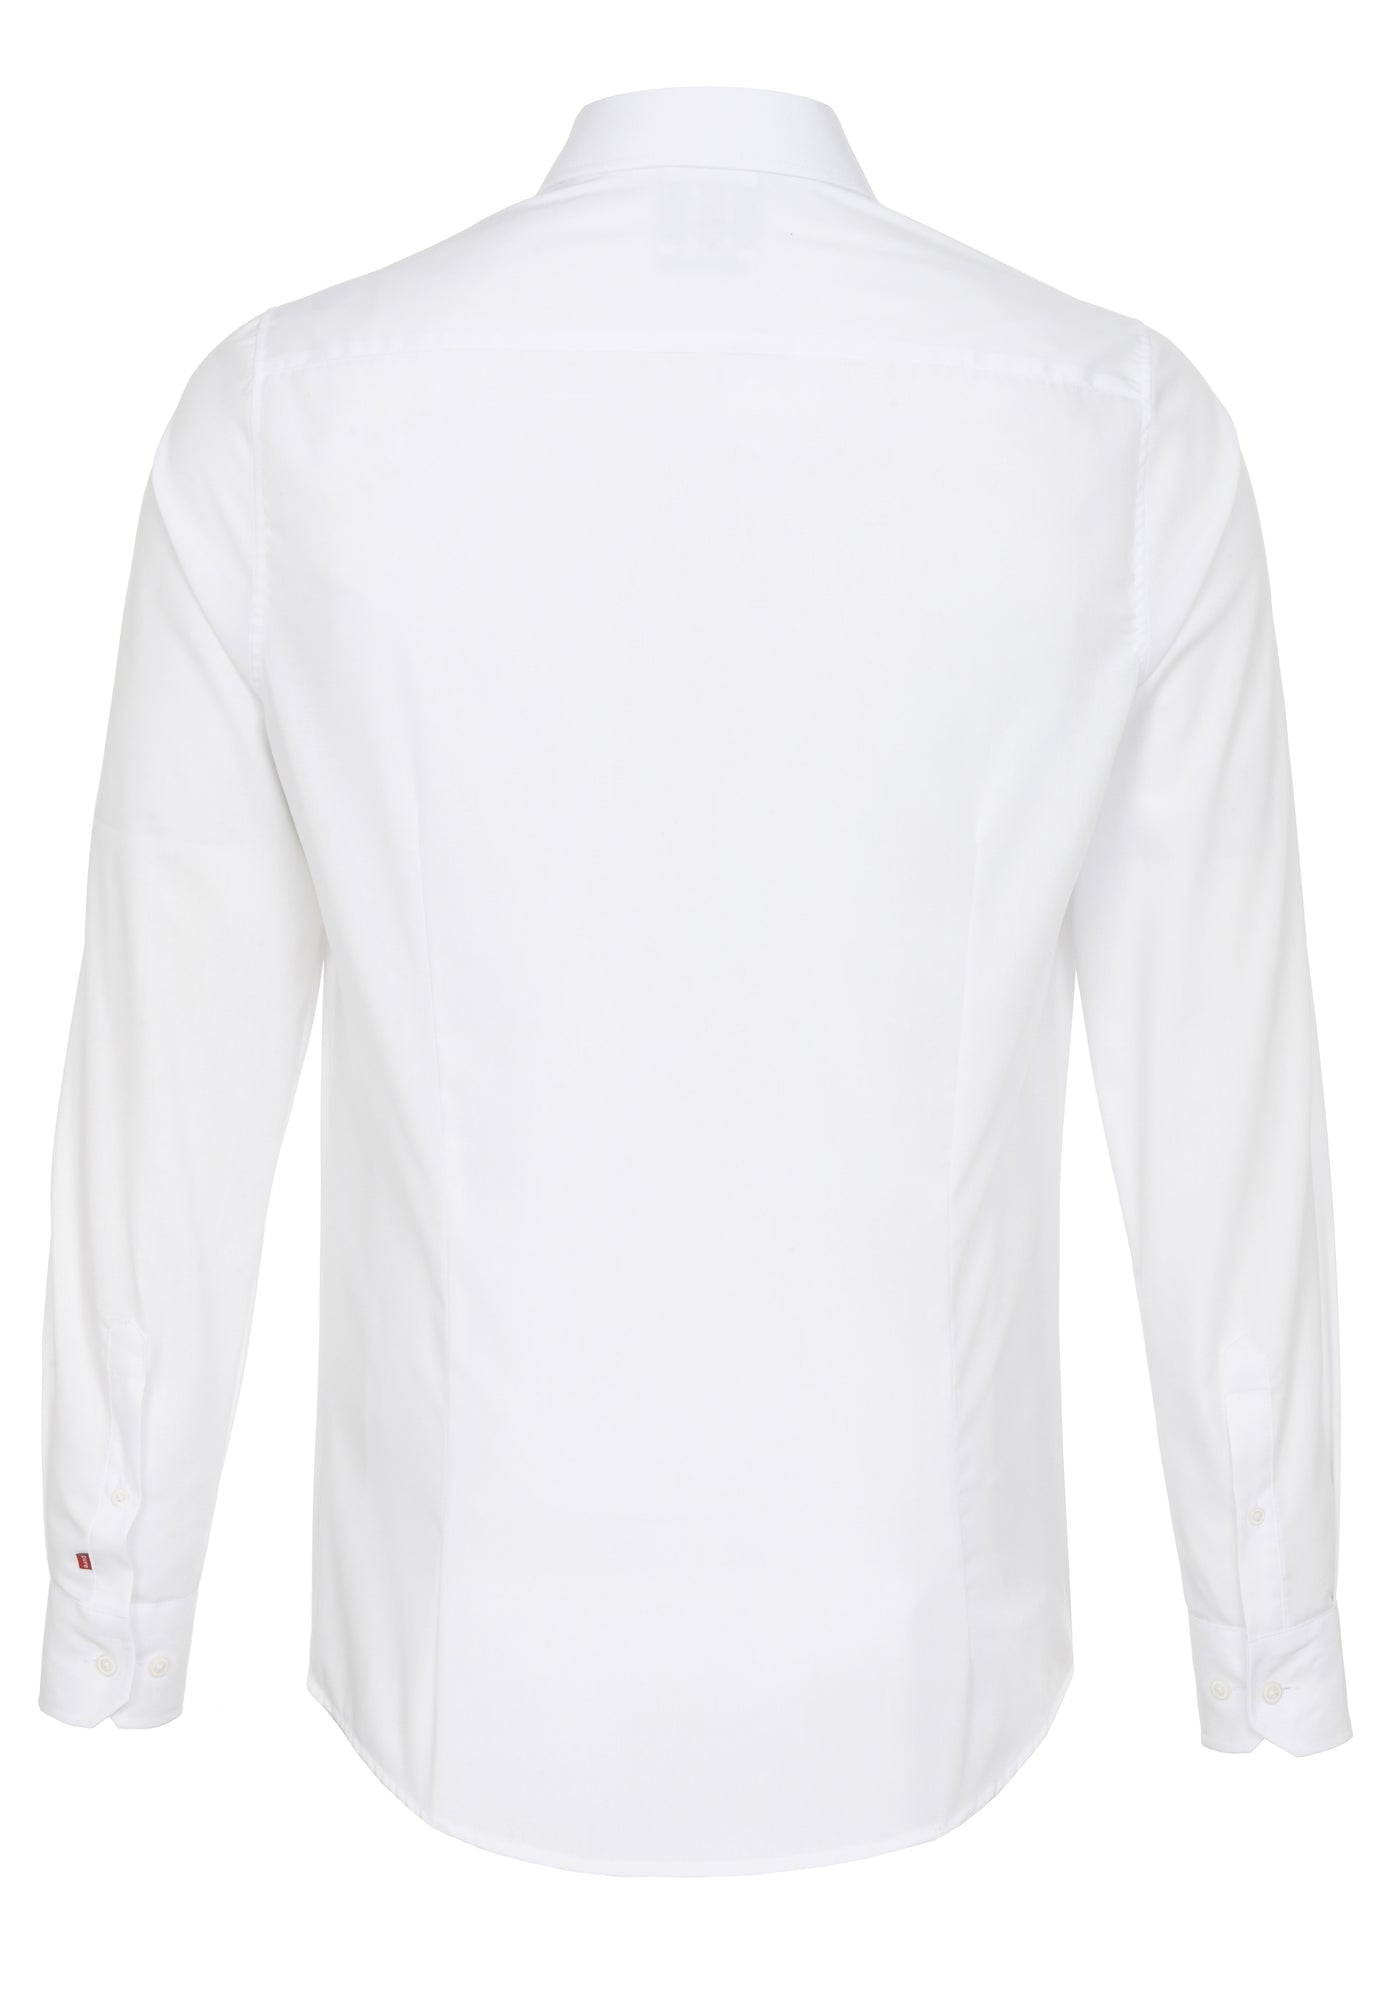 3330-802 - City Hemd Red extra lang - weiß - pureshirt